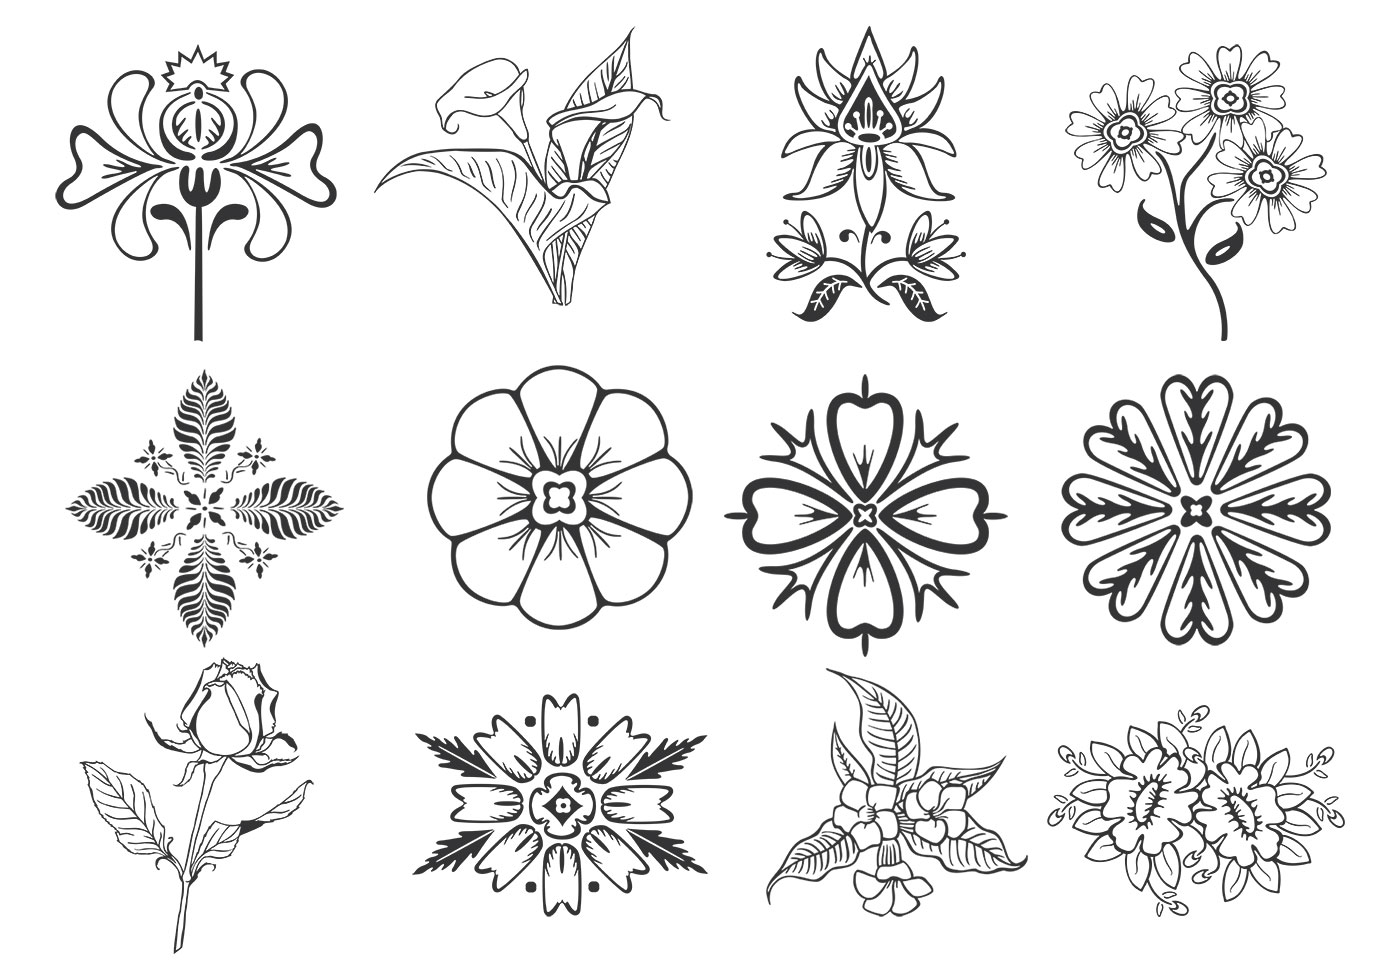 Download Floral Design Elements Vector Pack - Download Free Vectors ...